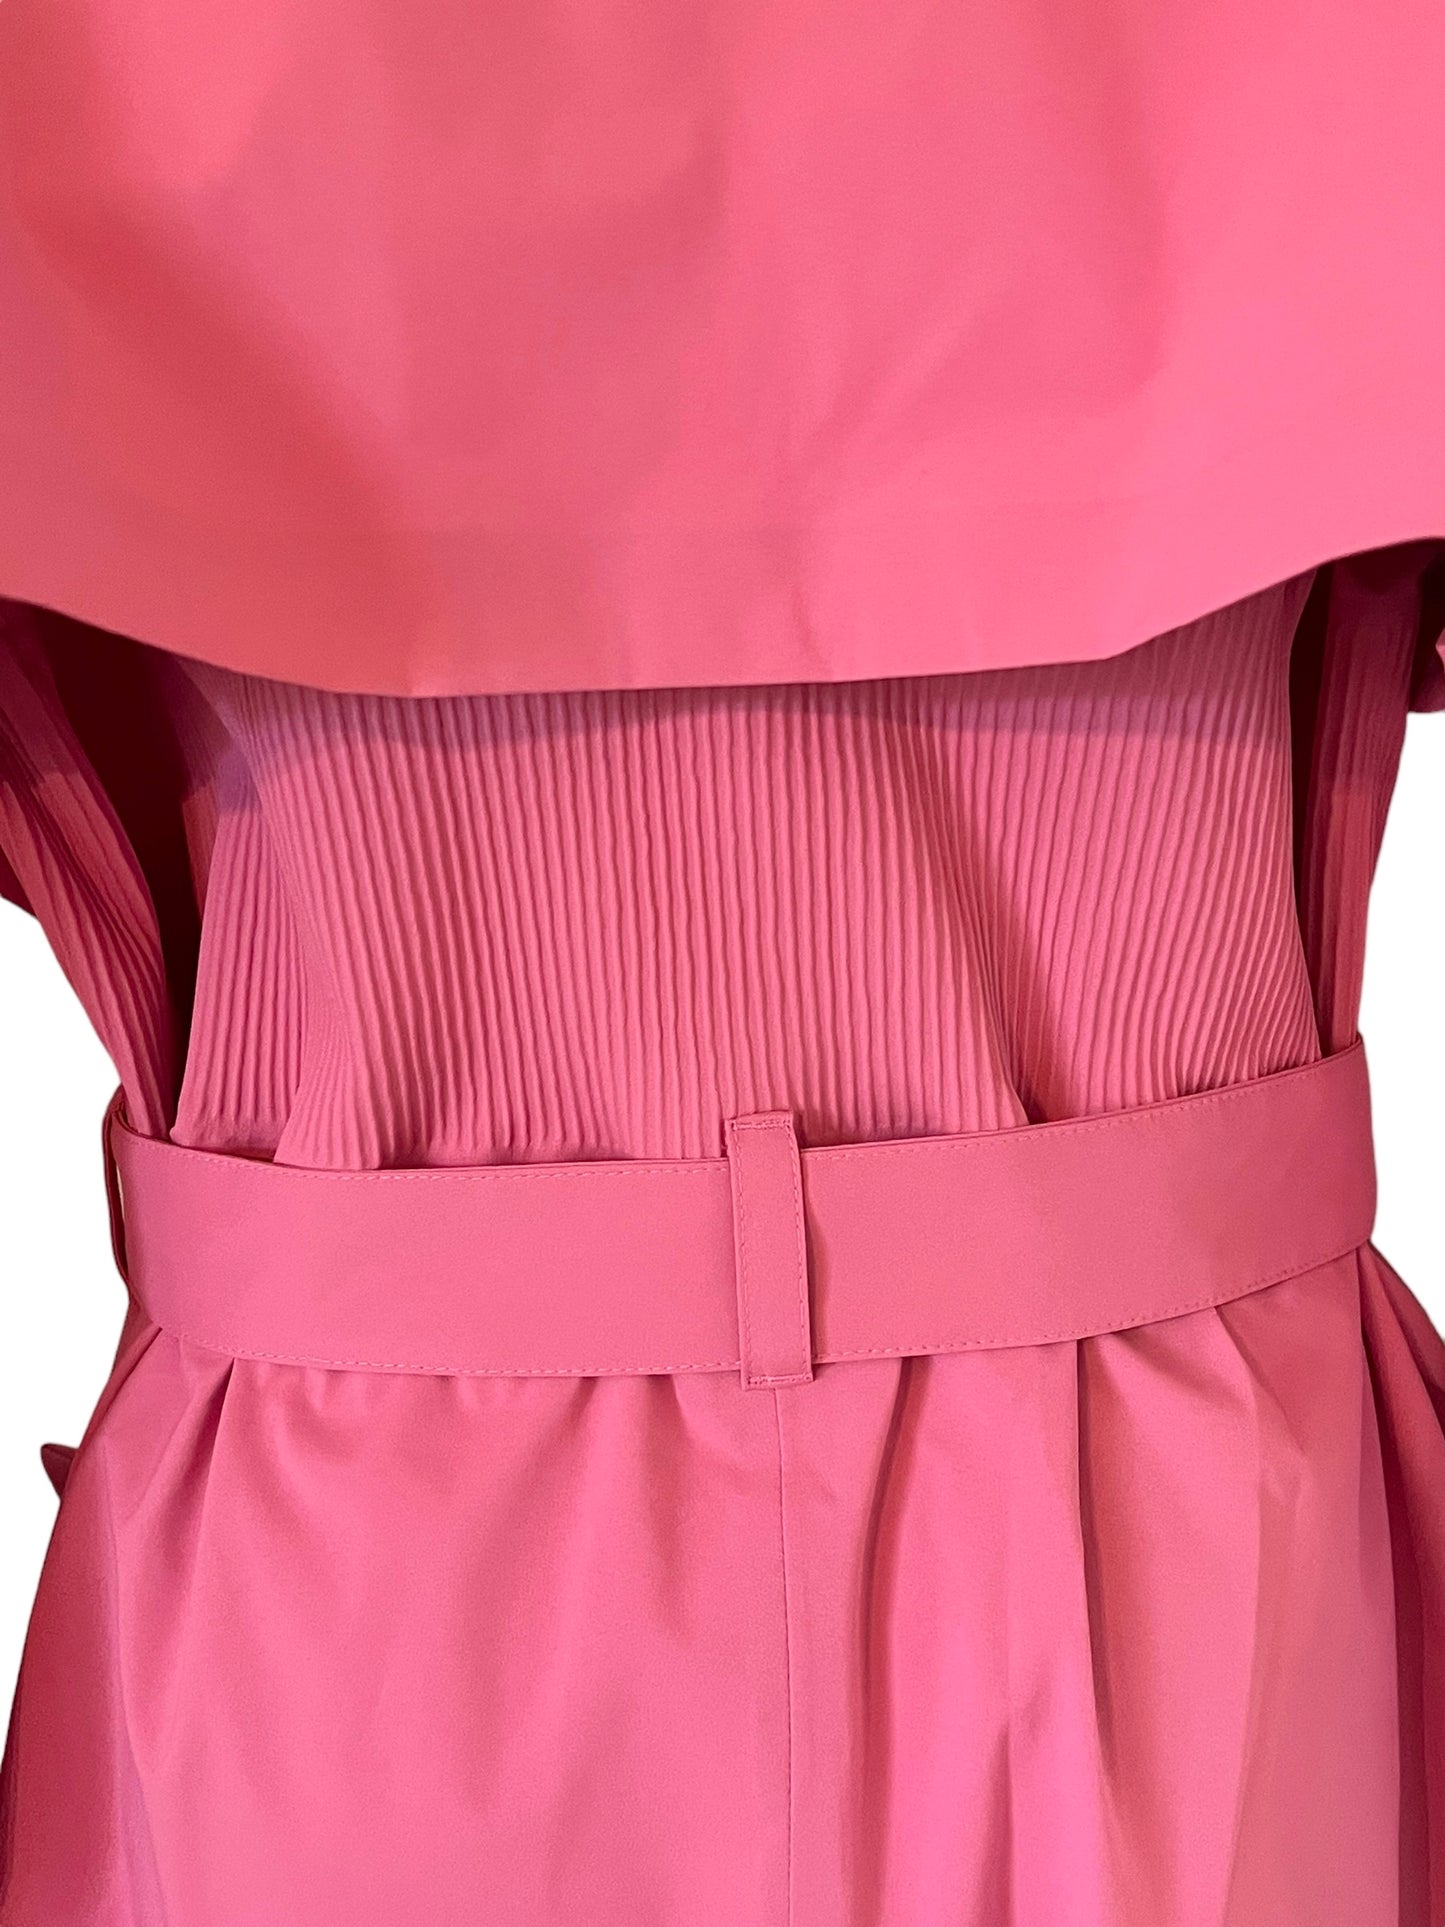 Nike Size L Pink Glow Sportswear Storm-FIT ADV Tech Pack Trench Coat